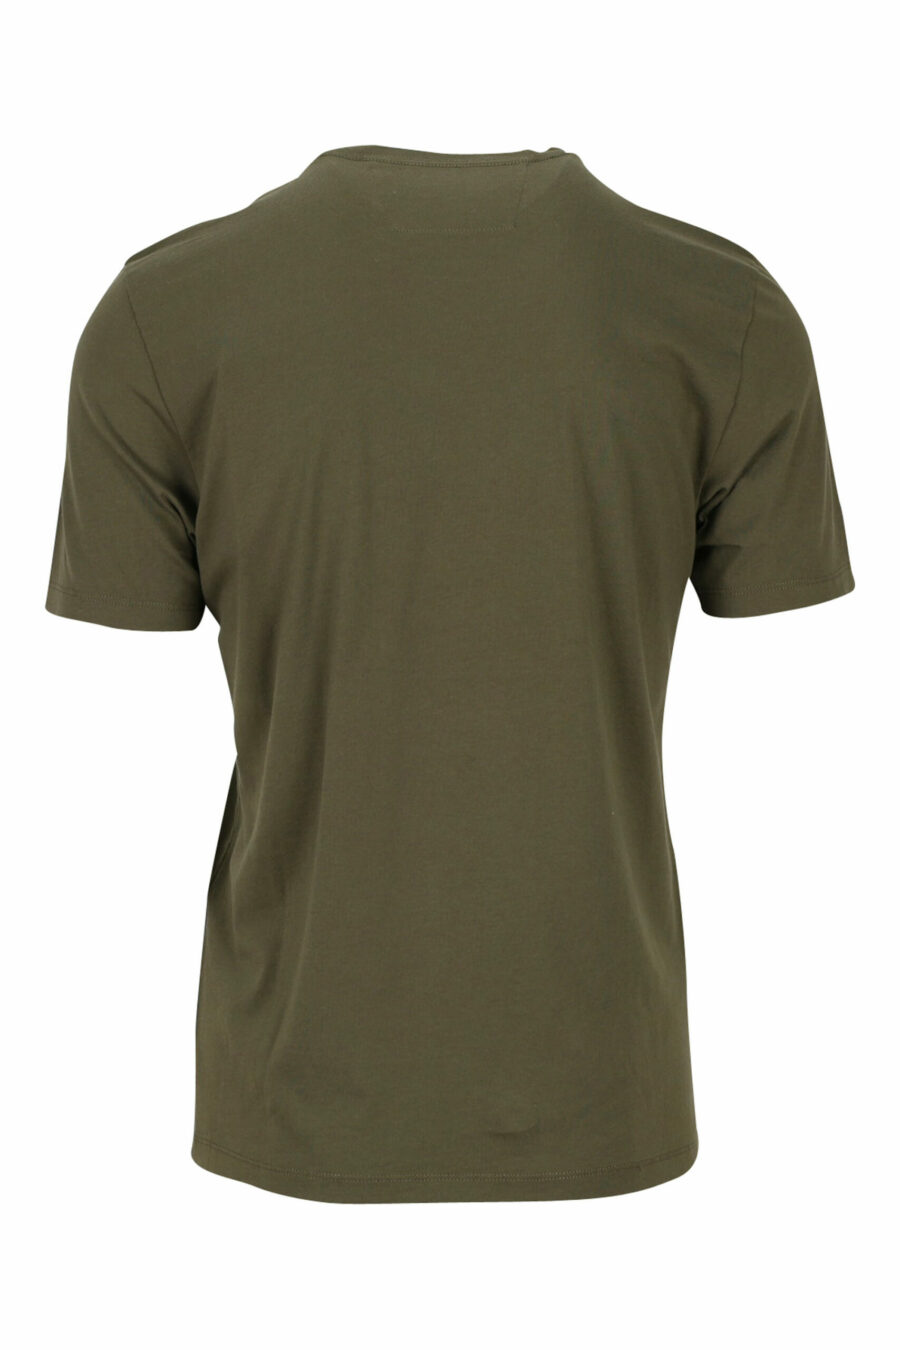 Grünes Militär-T-Shirt mit Maxilogo - 7620943559187 1 skaliert